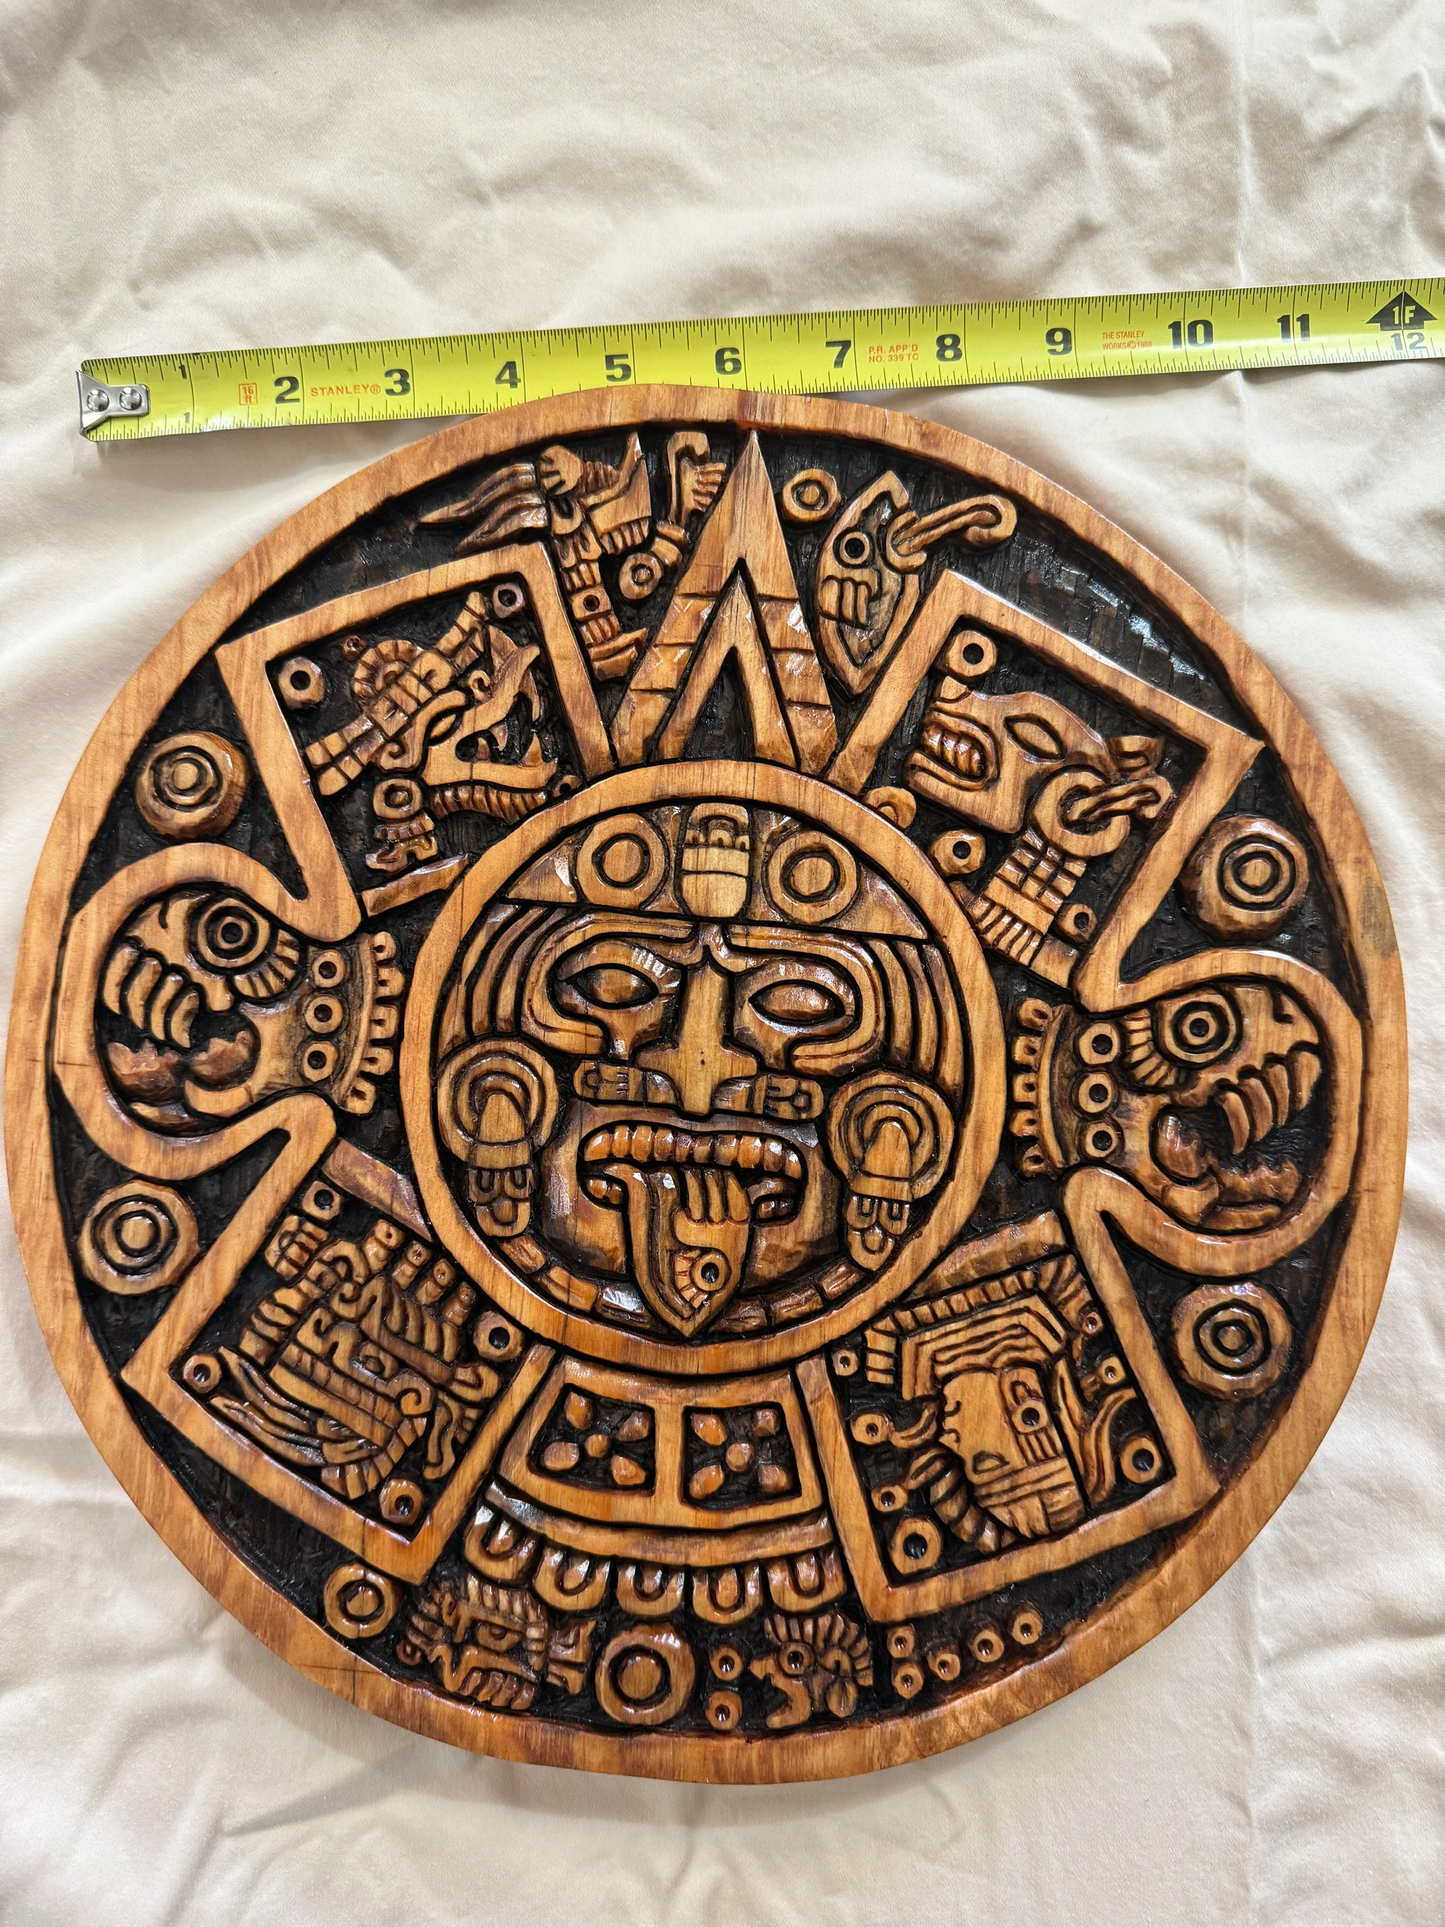 Wood Carved Tonatiuh Aztec Sun God Plaque, Disc, Mexico 12", Aztec calendar face, Mexican Art, Ancient Mexico Indians, Sol, Sacrifice